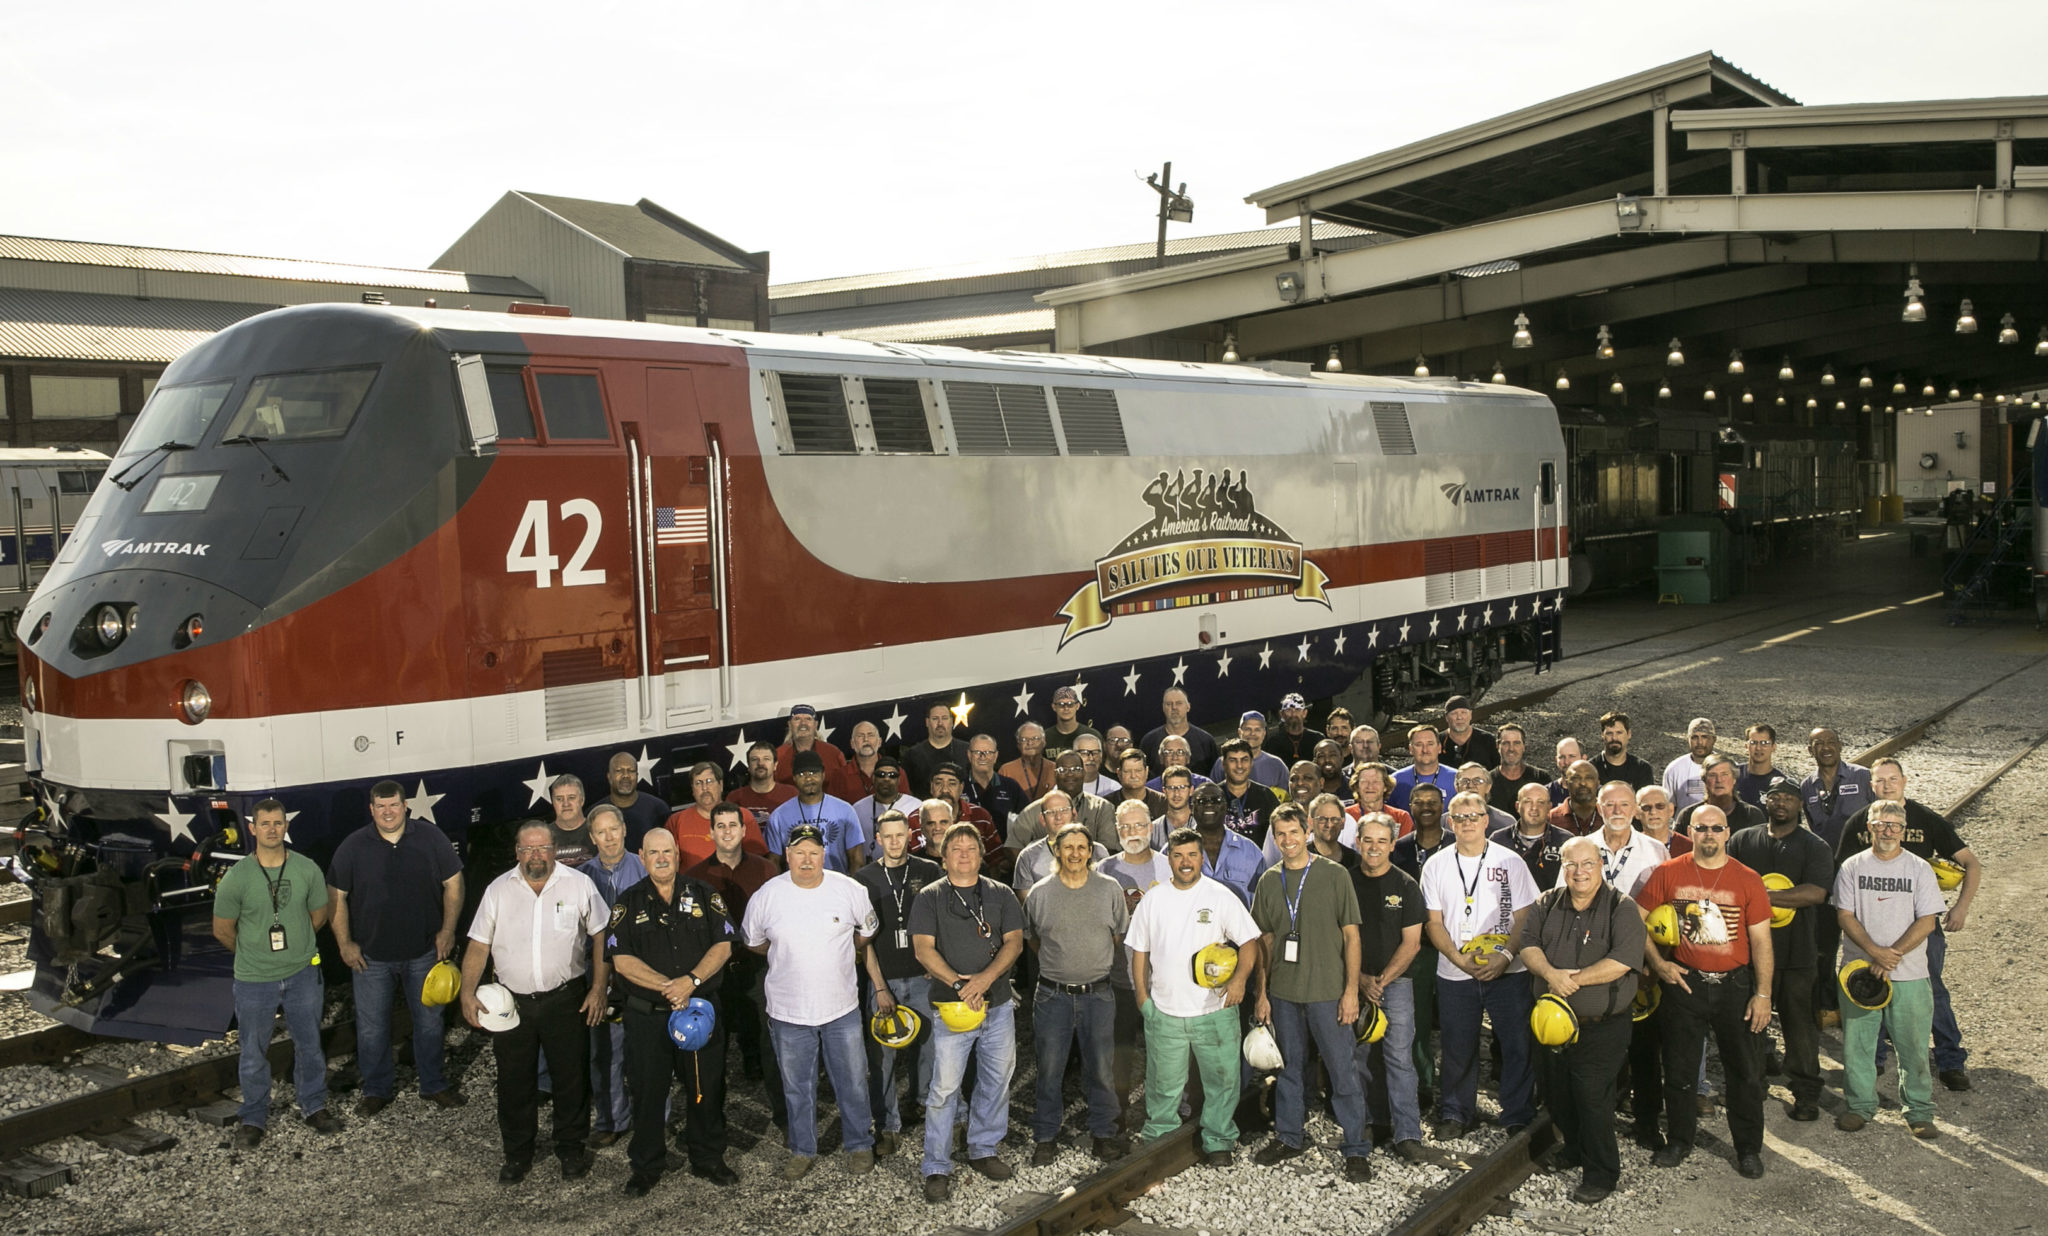 VIDEO: Veterans Find Bright Future at Amtrak